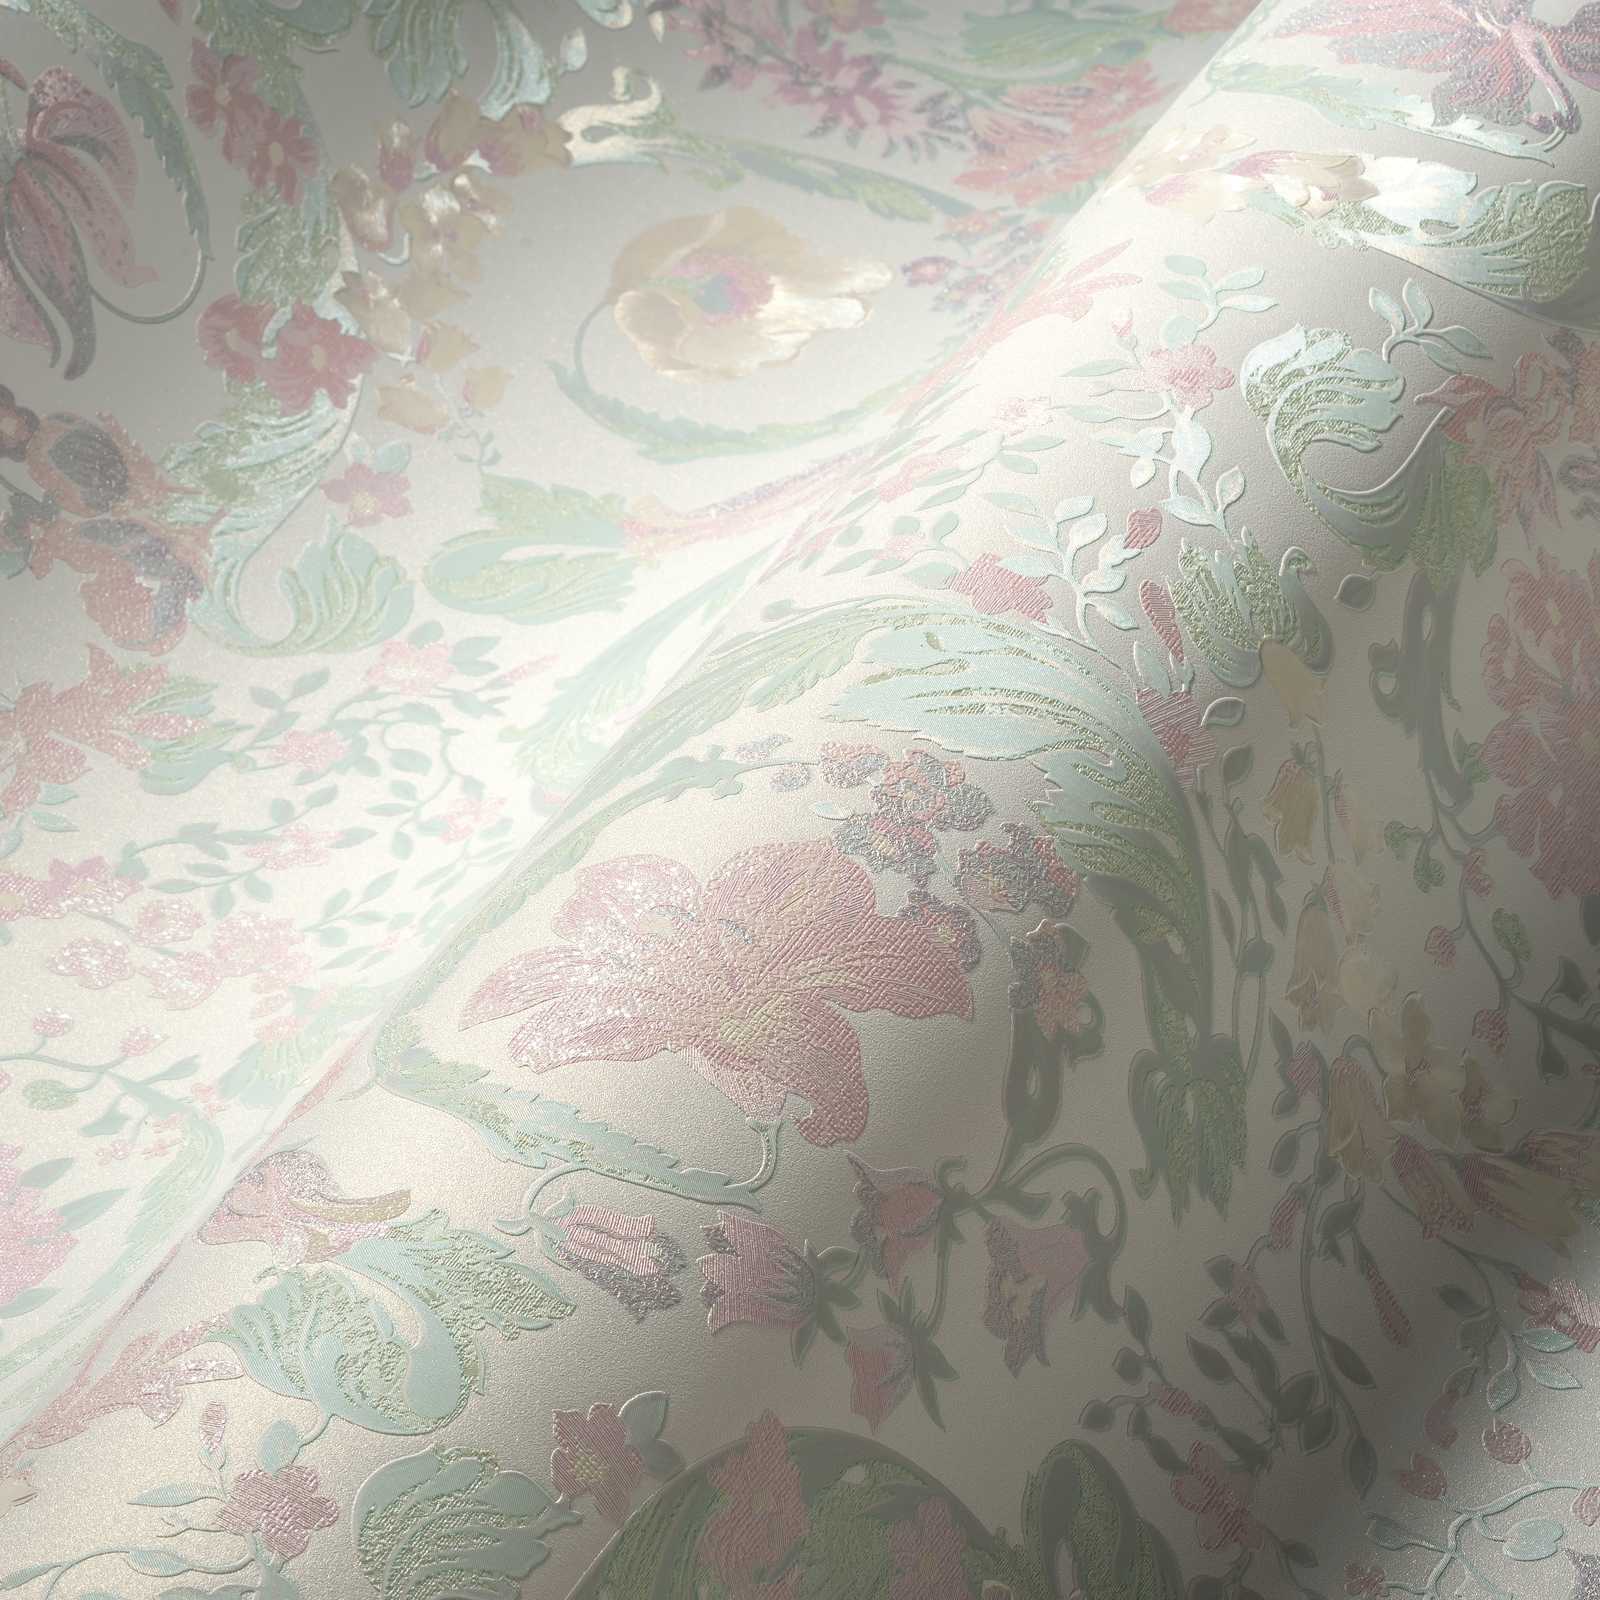             Pastell Tapete VERSACE mit floral Ornament – Bunt, Metallic
        